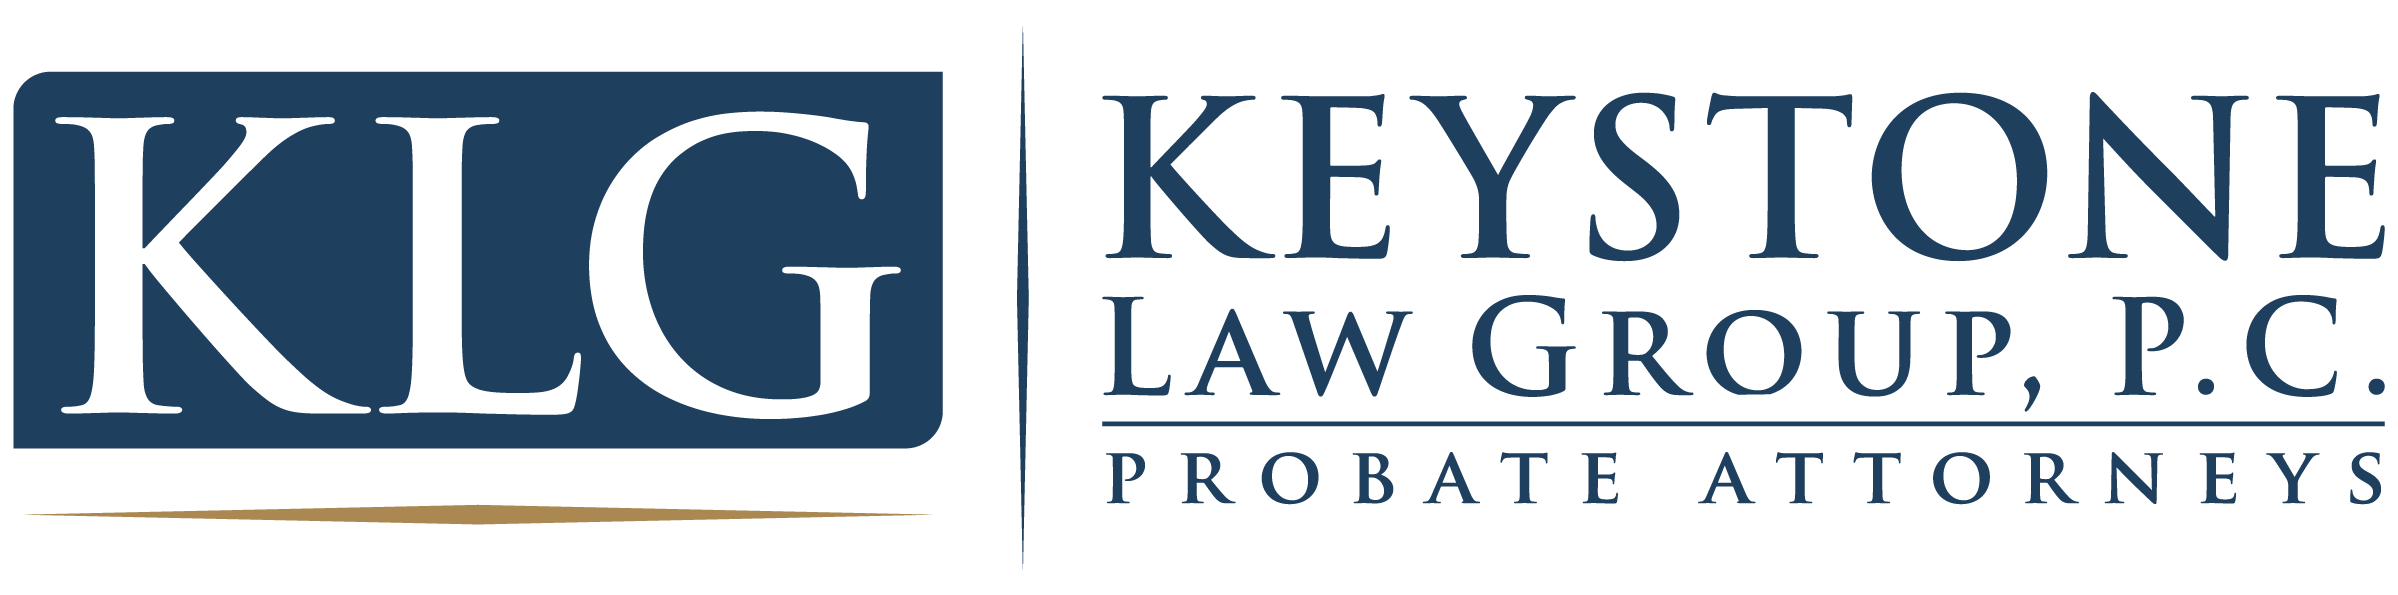 Keystone Law Group, P.C. law firm logo